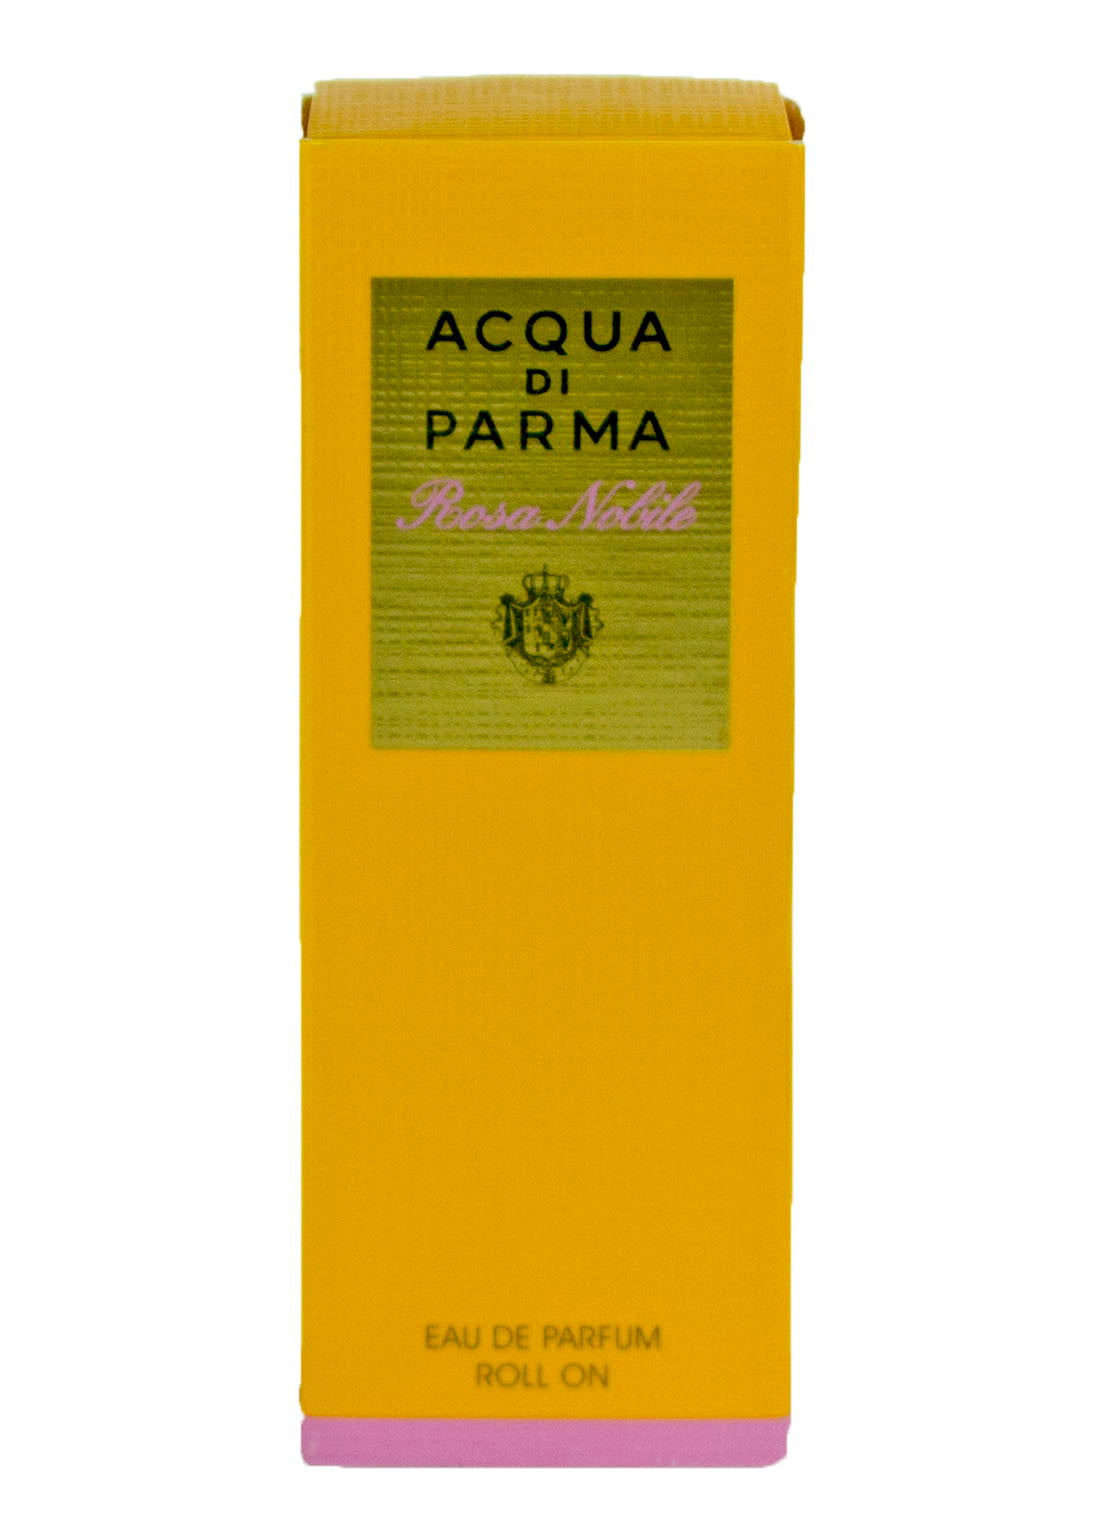 Acqua Di Parma 'Rosa Nobile' Eau De Parfum Roll On 0.25 oz 7.5 ml Mini